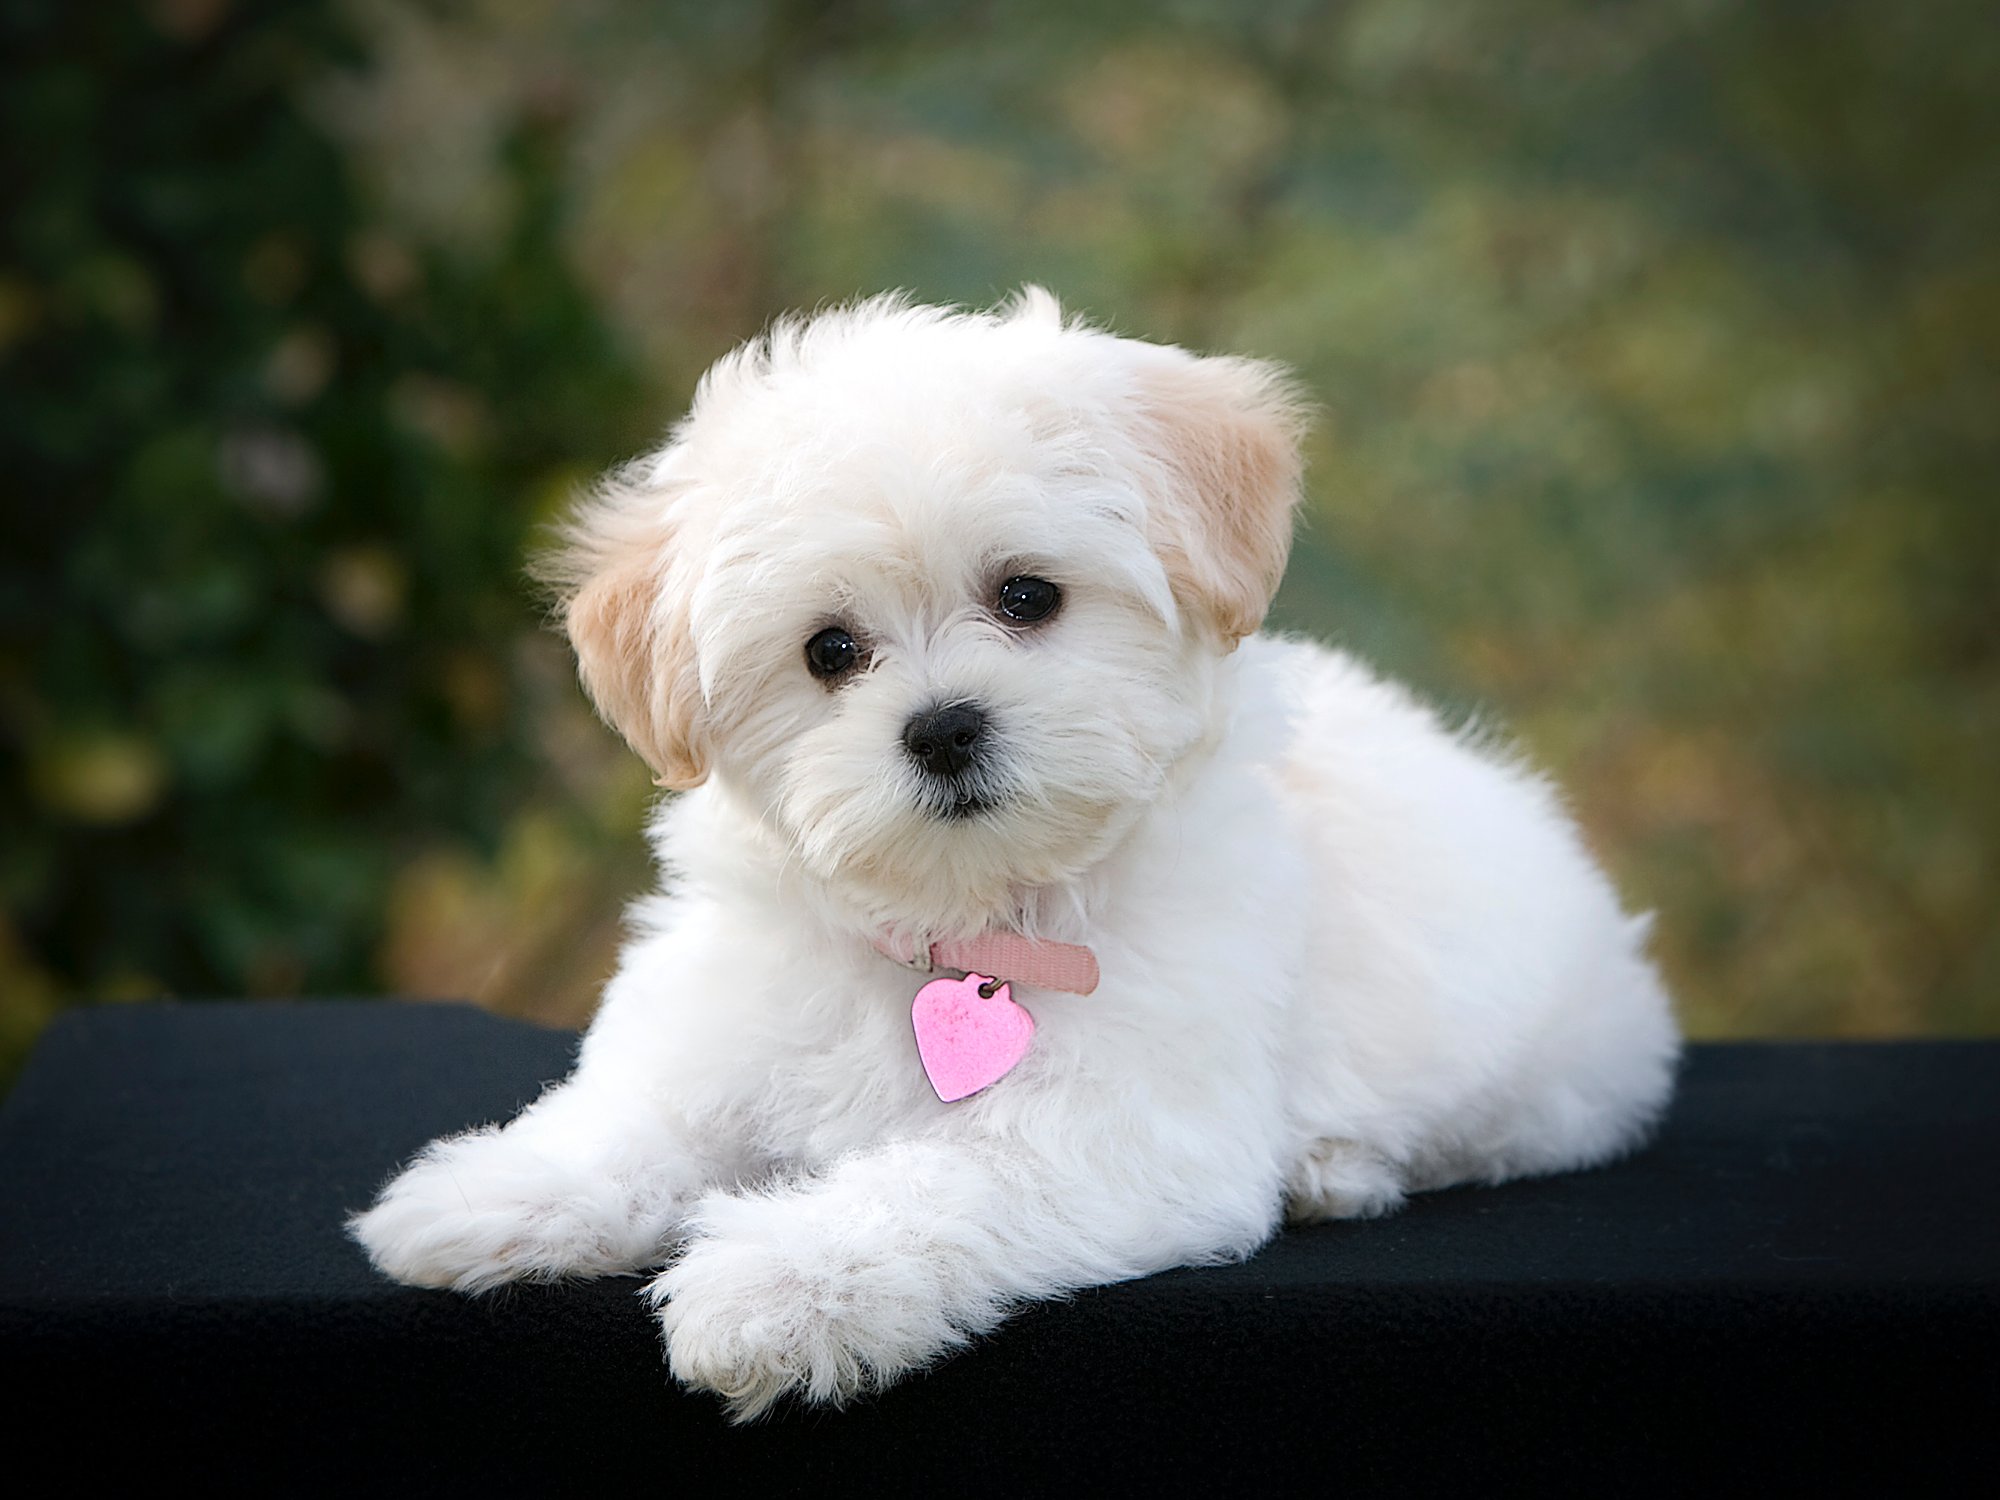 Premium Photo  Cute dog for wallpaper and graphic designsselective focus  2d illustration